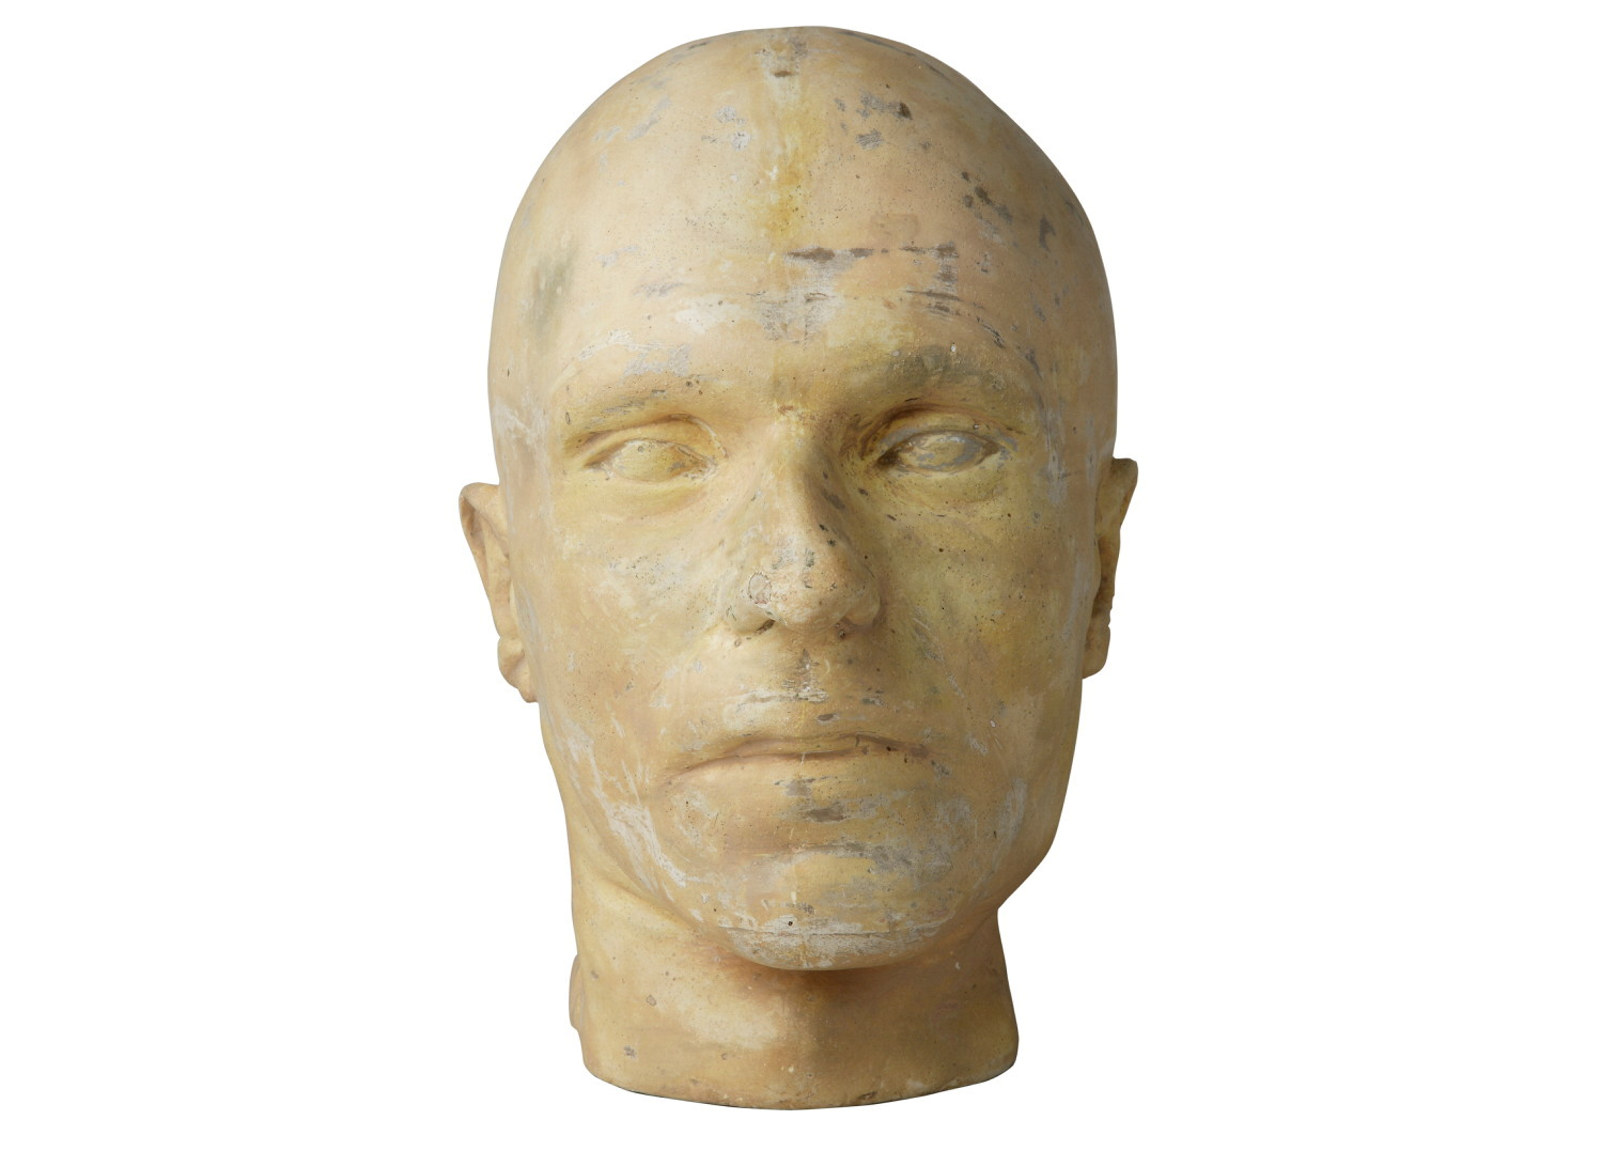 Plaster death mask of man's head